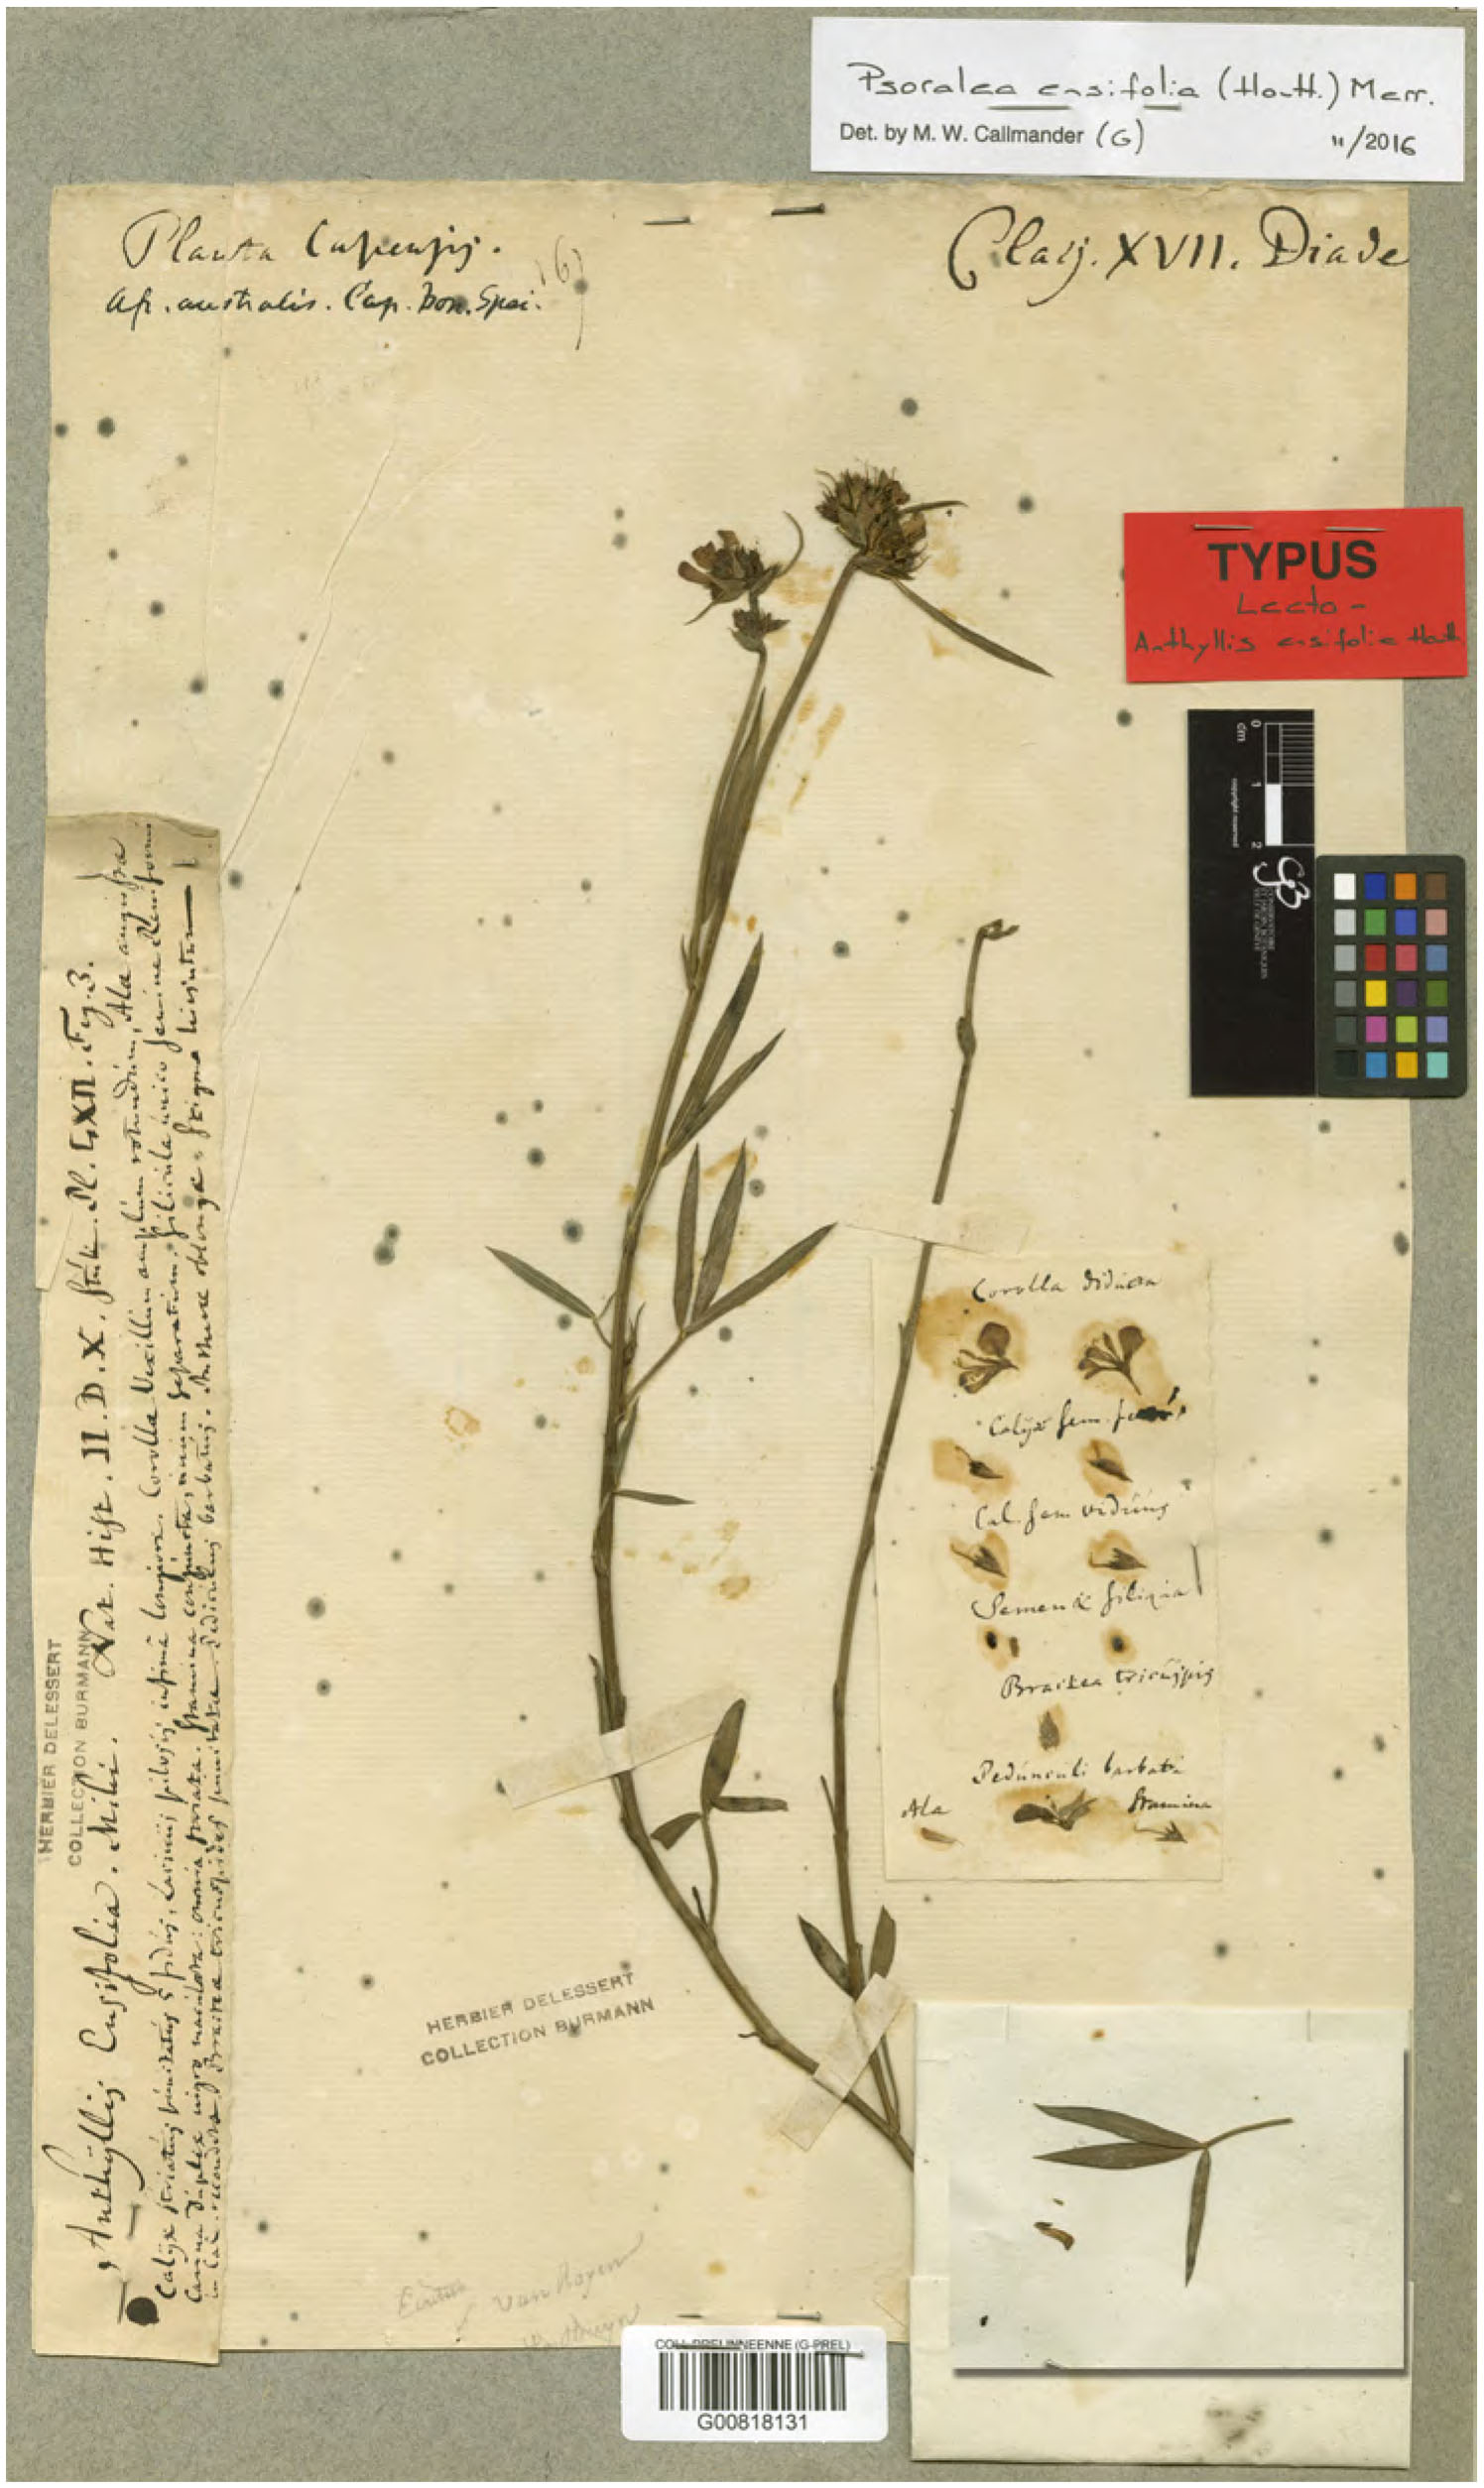 The botanical legacy of Martinus Houttuyn (1720–1798) in Geneva